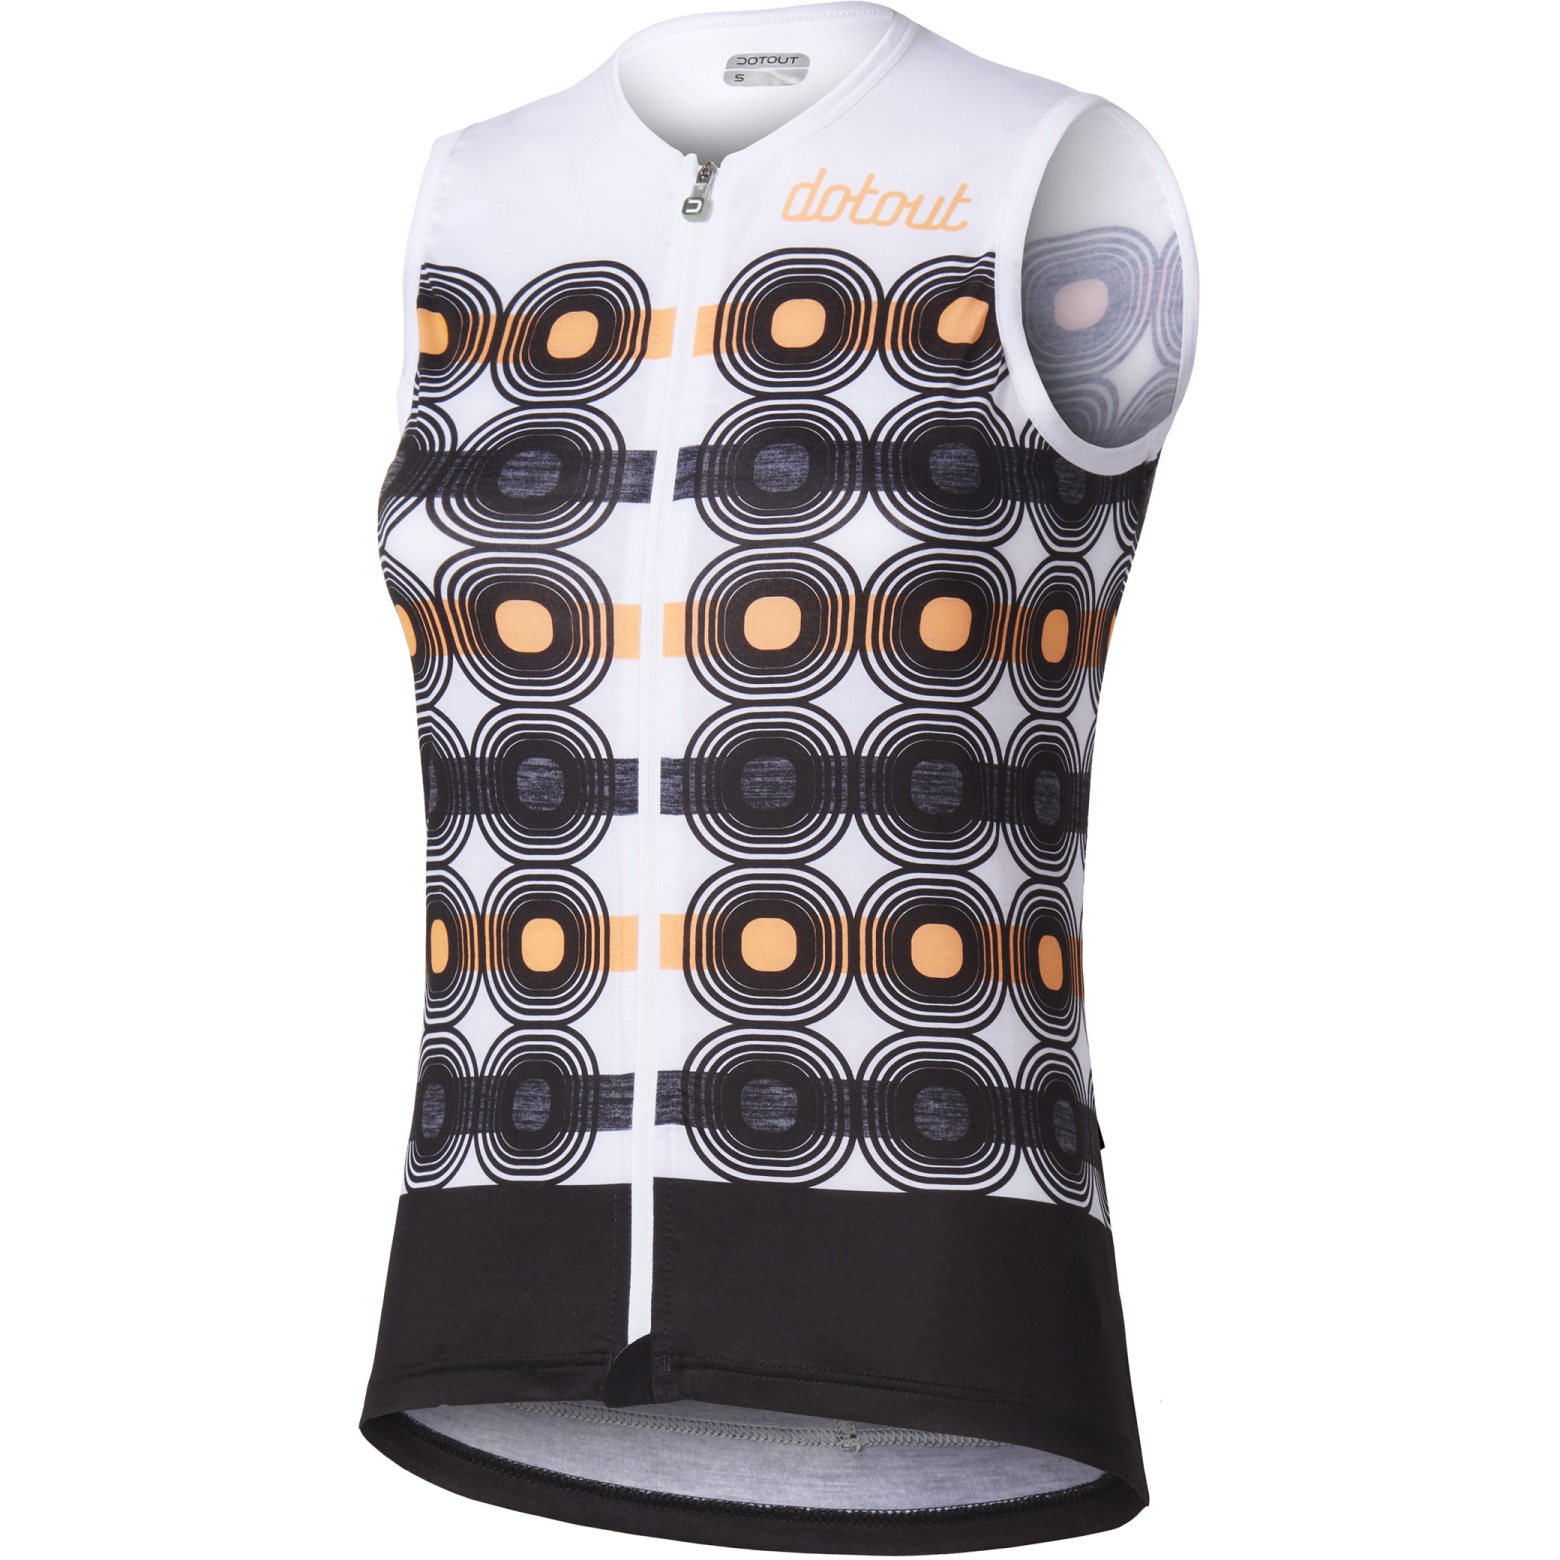 Productfoto van Dotout Flake Fietsshirt zonder Mouwen Dames - zwart/wit